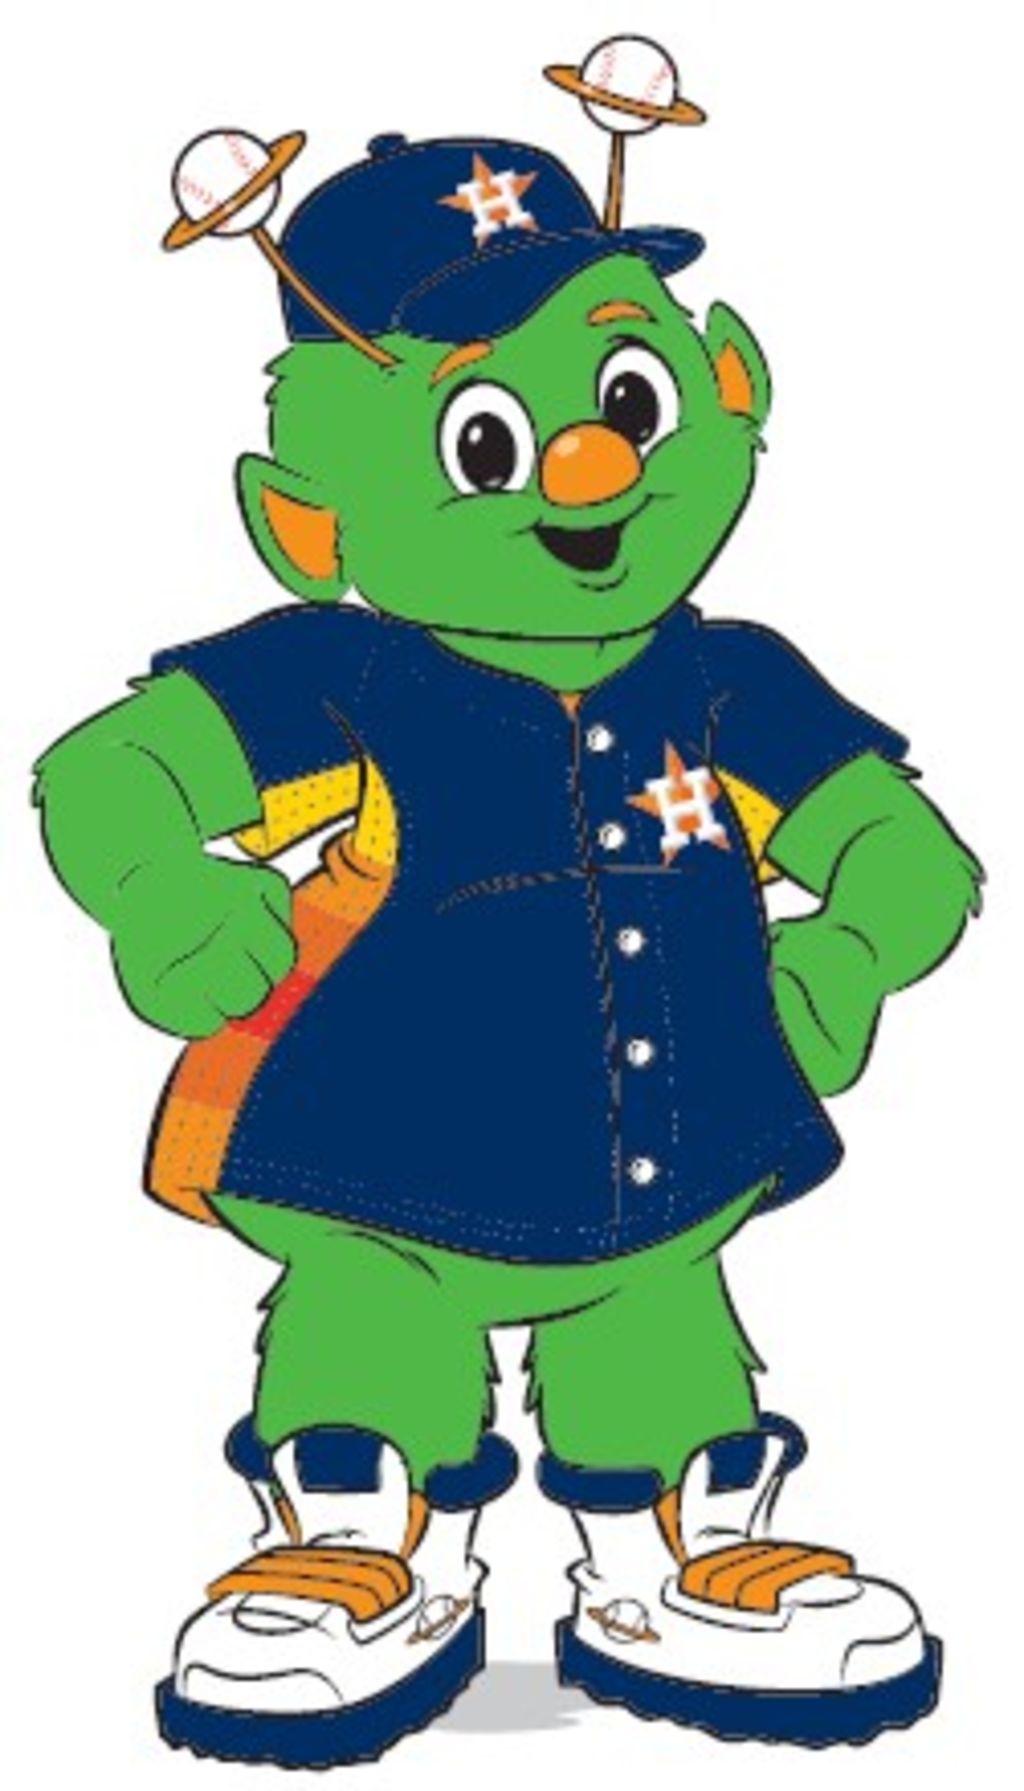 Houston Astros Orbit mascot shirt - Limotees